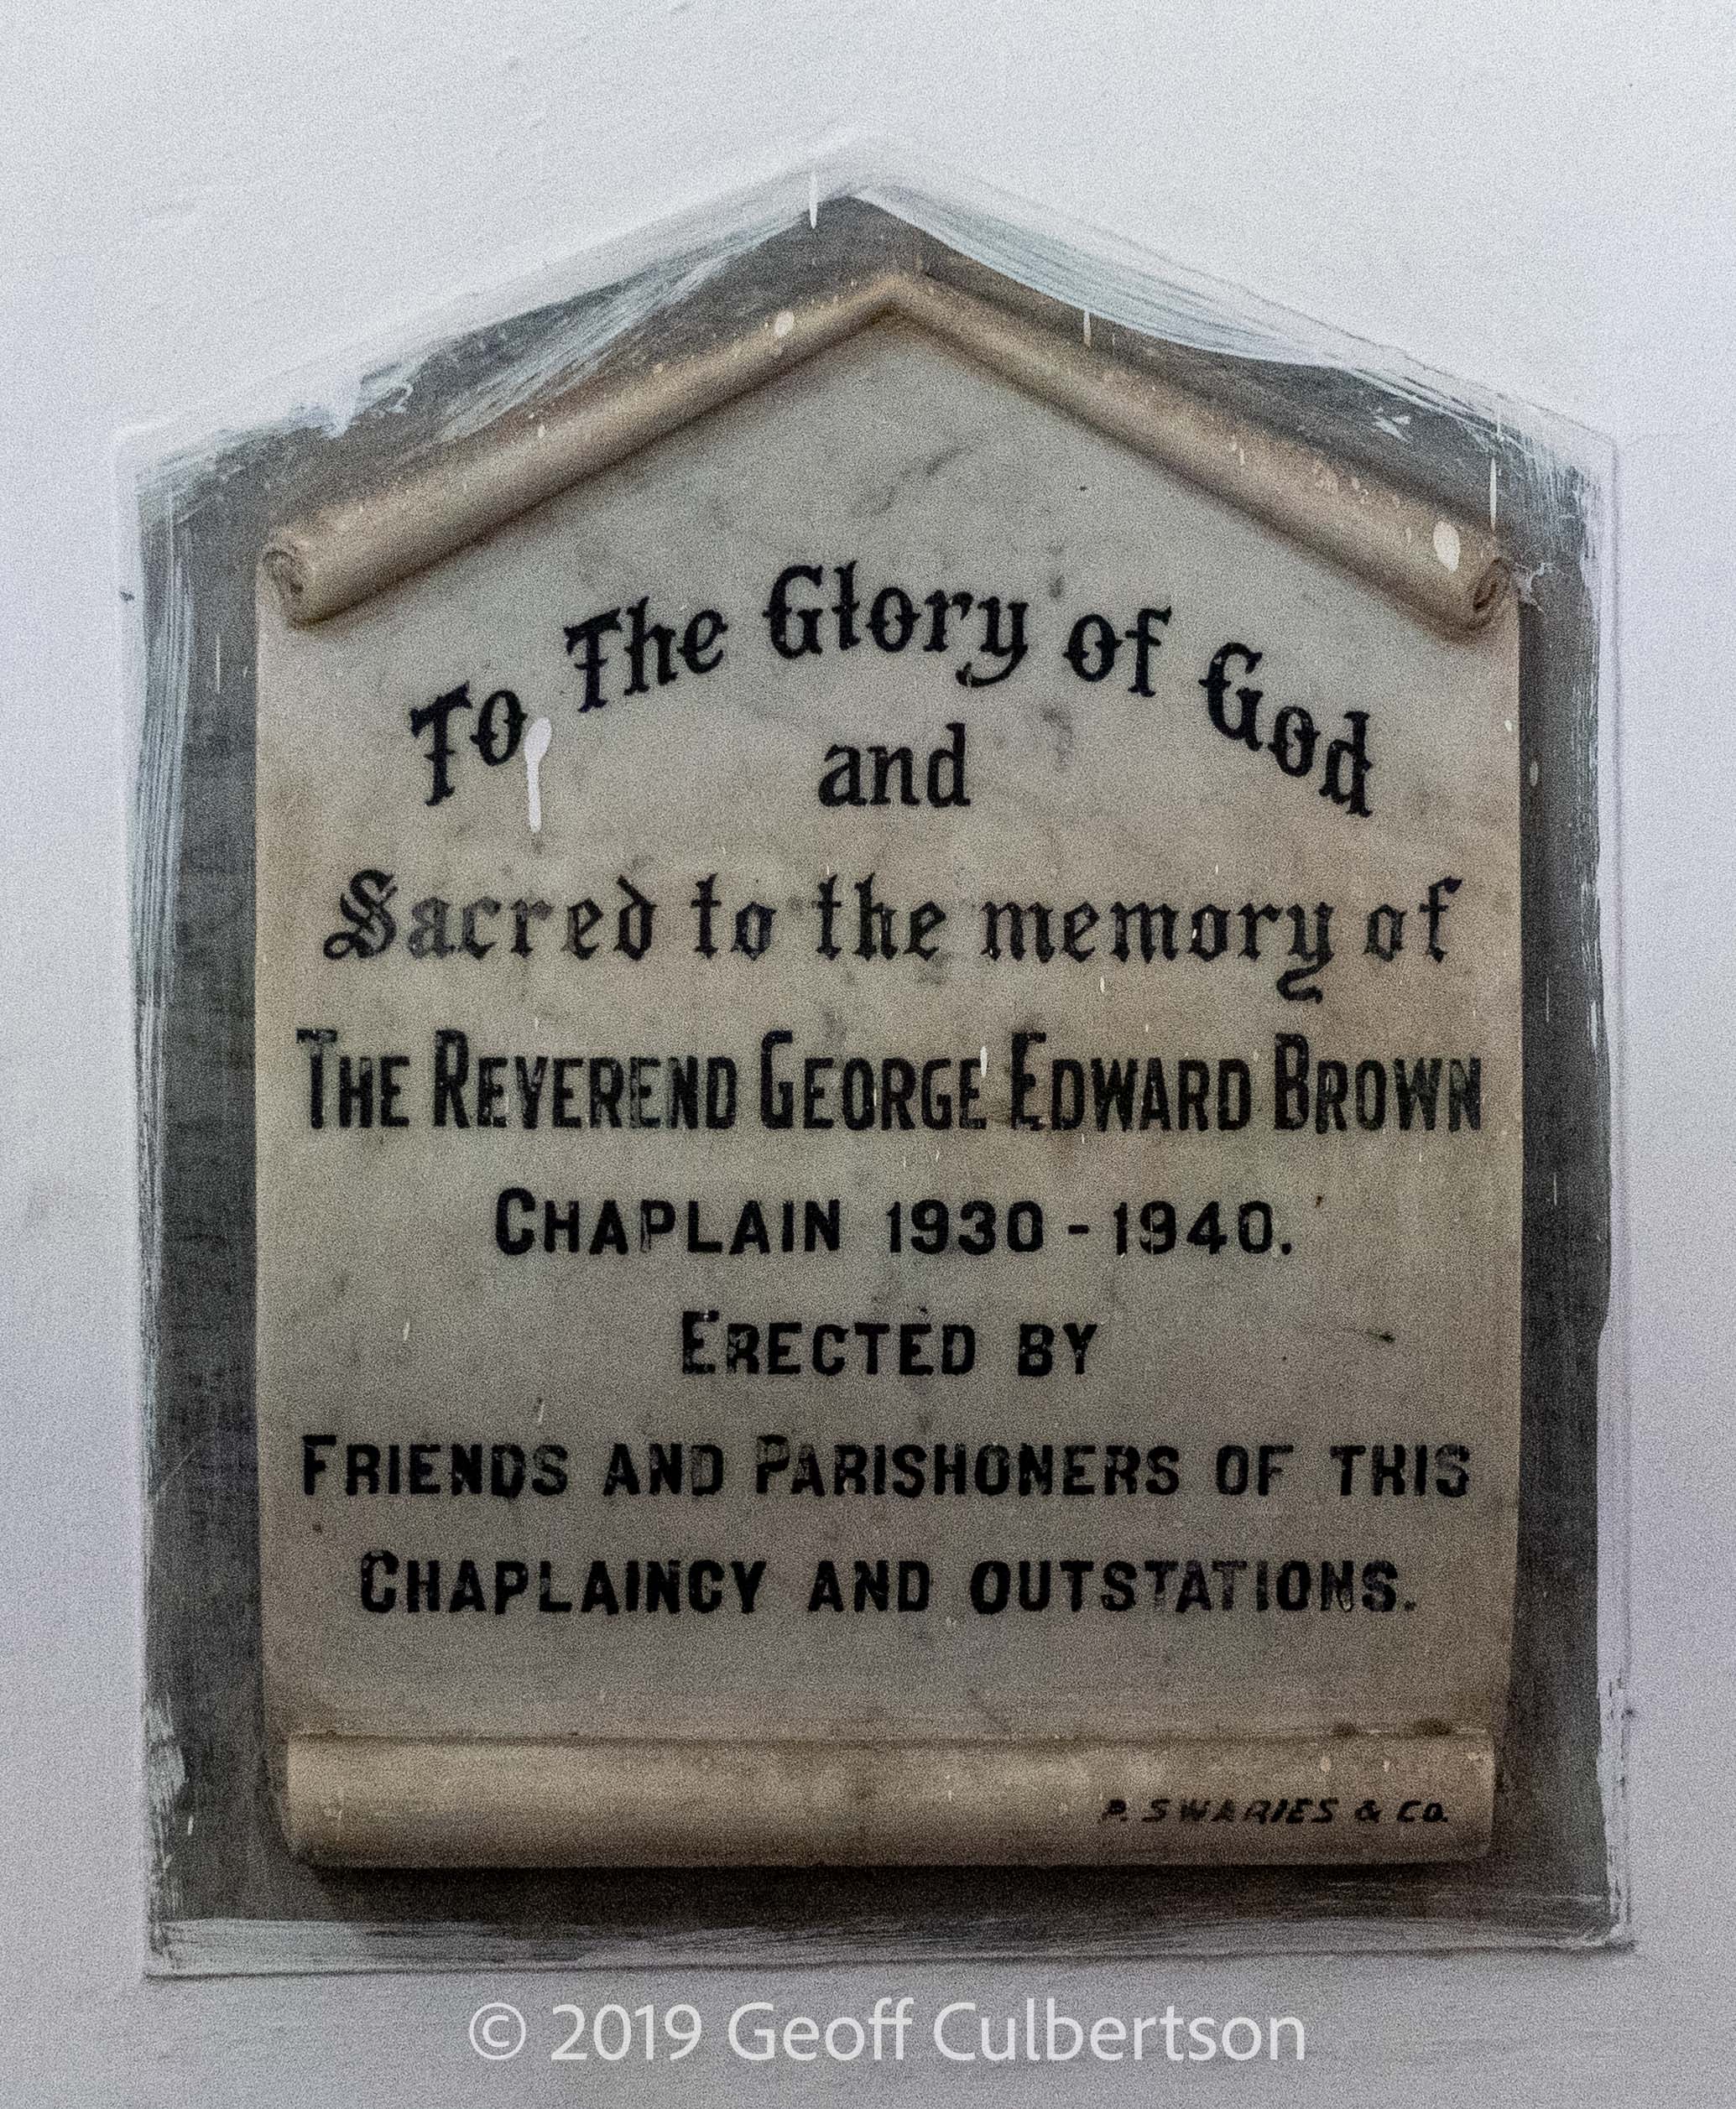 MI - Rev George Edward Brown, Chaplain 1930-1940